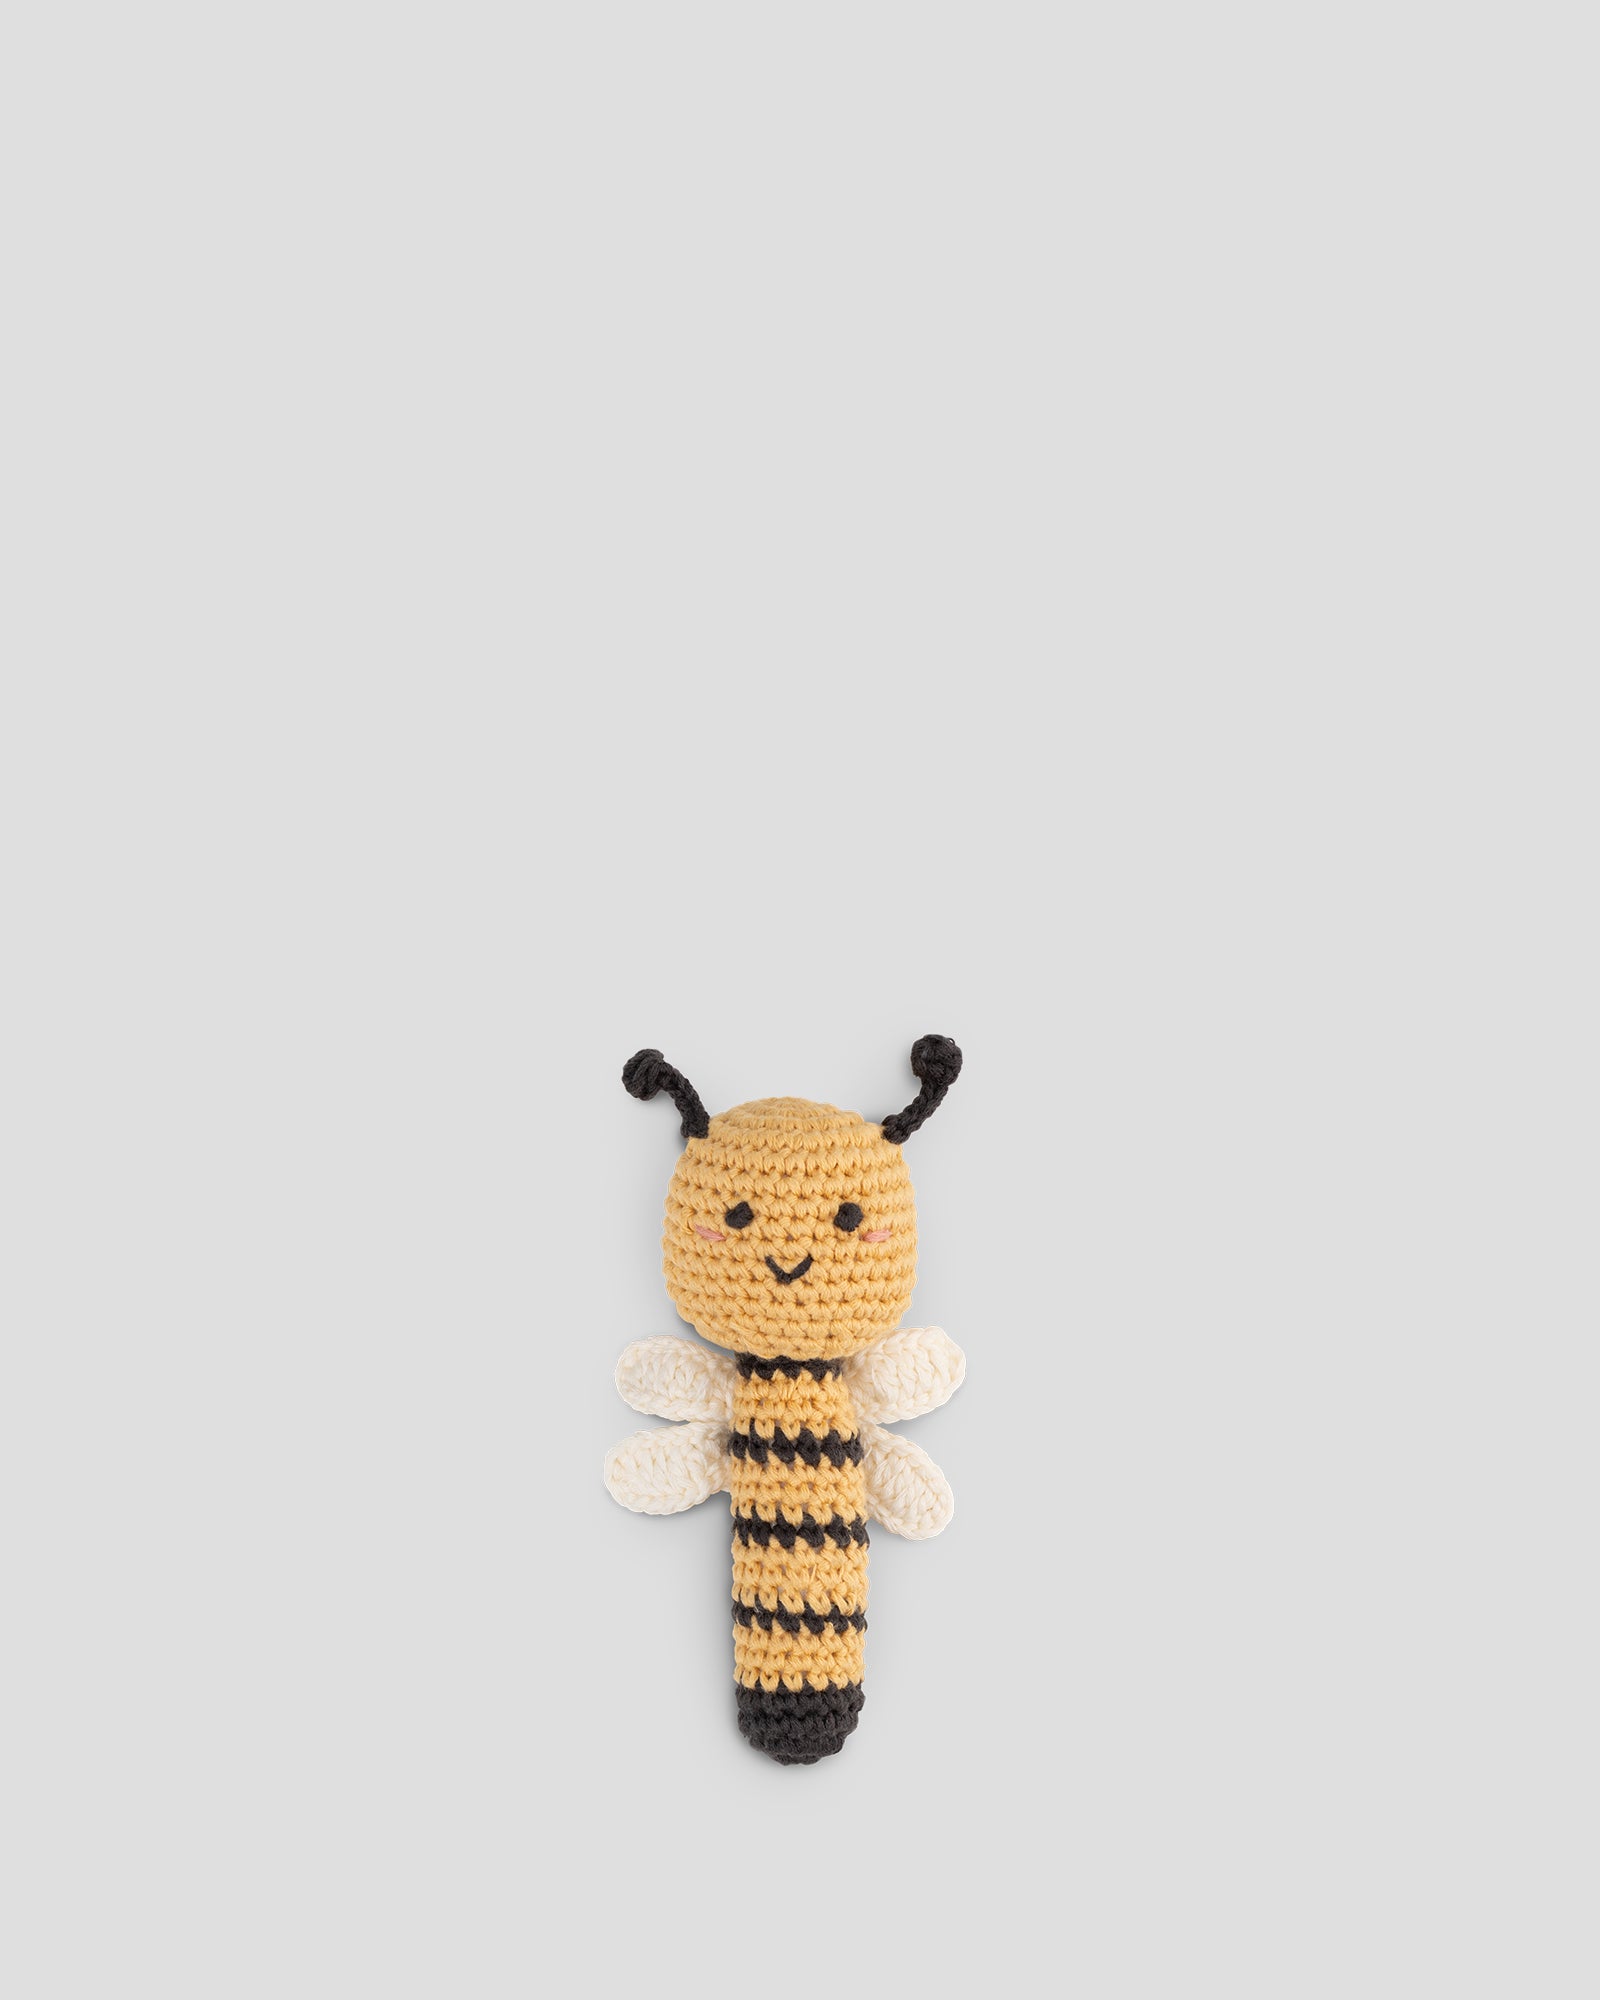 The Little Linen Company Crochet Baby Rattle - Nigel the Nectar Bee